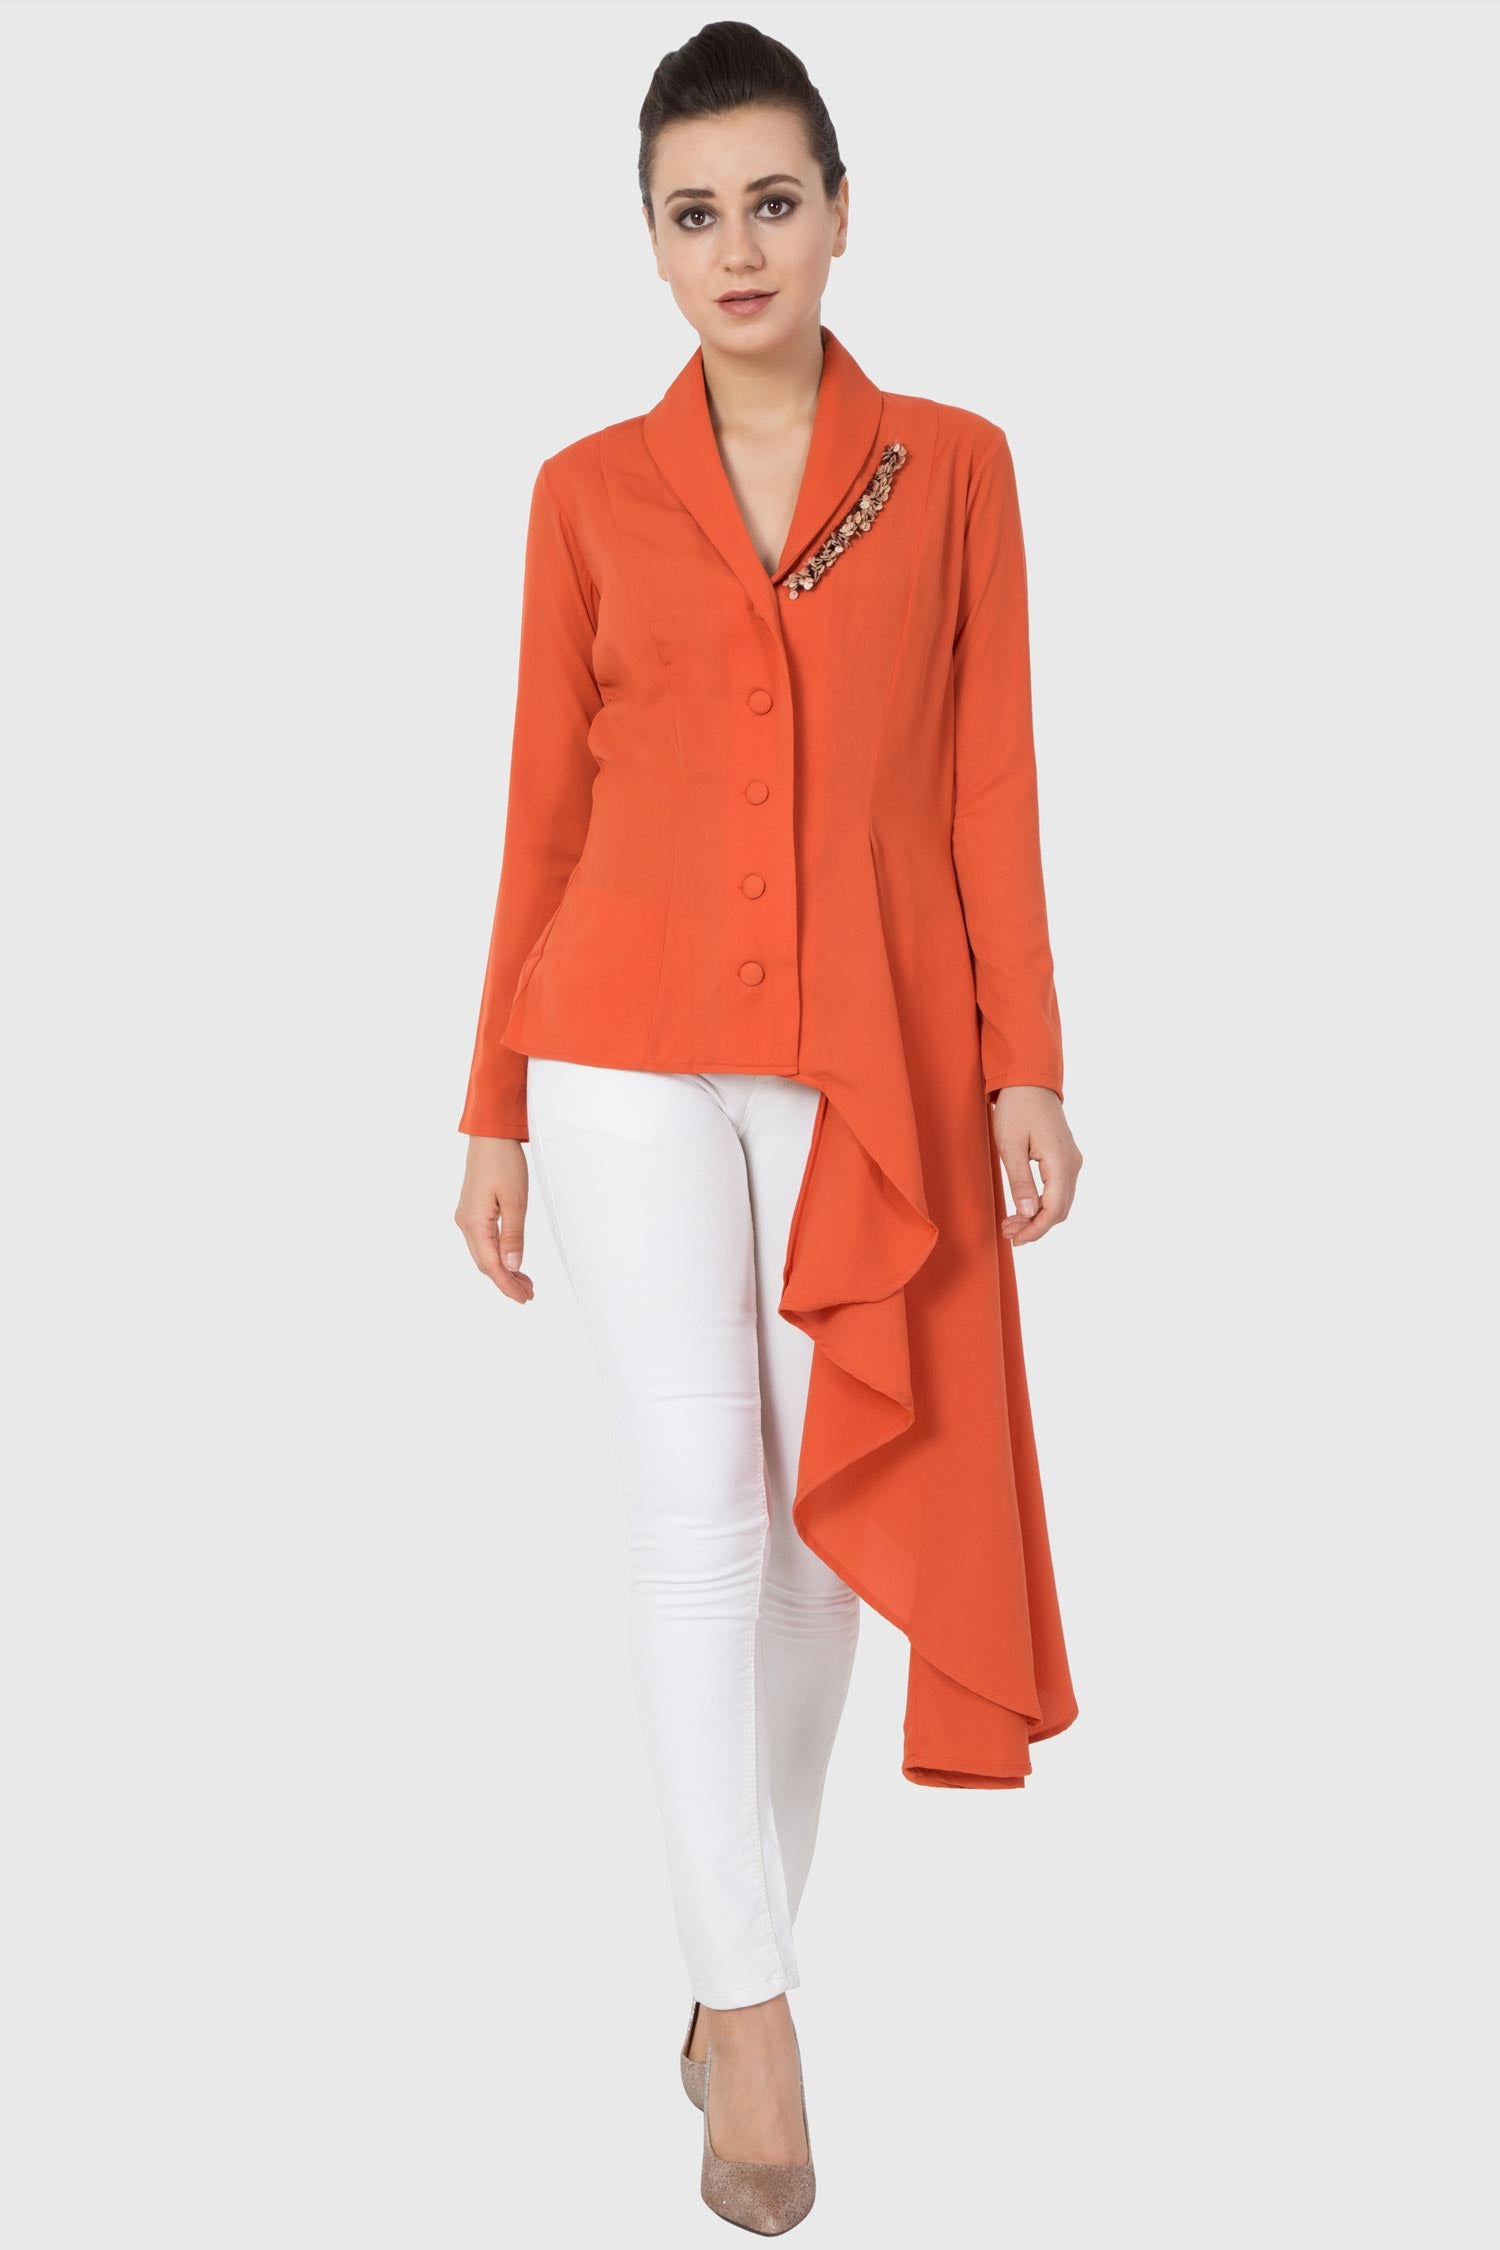 Orange Embroidered Blazer Tunic Top